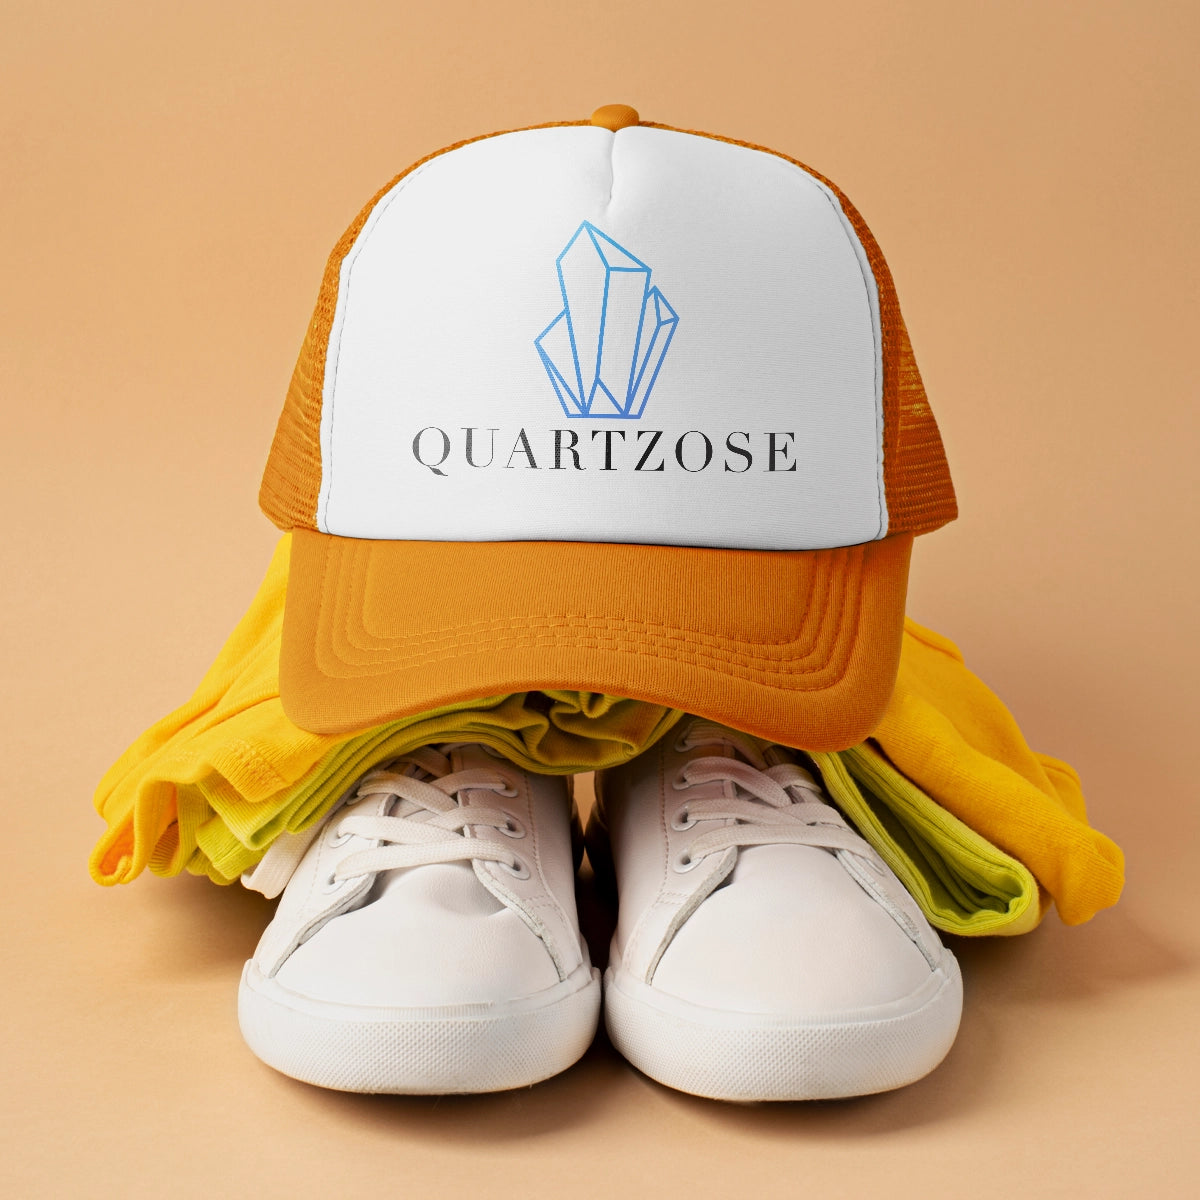 Quartzose.com